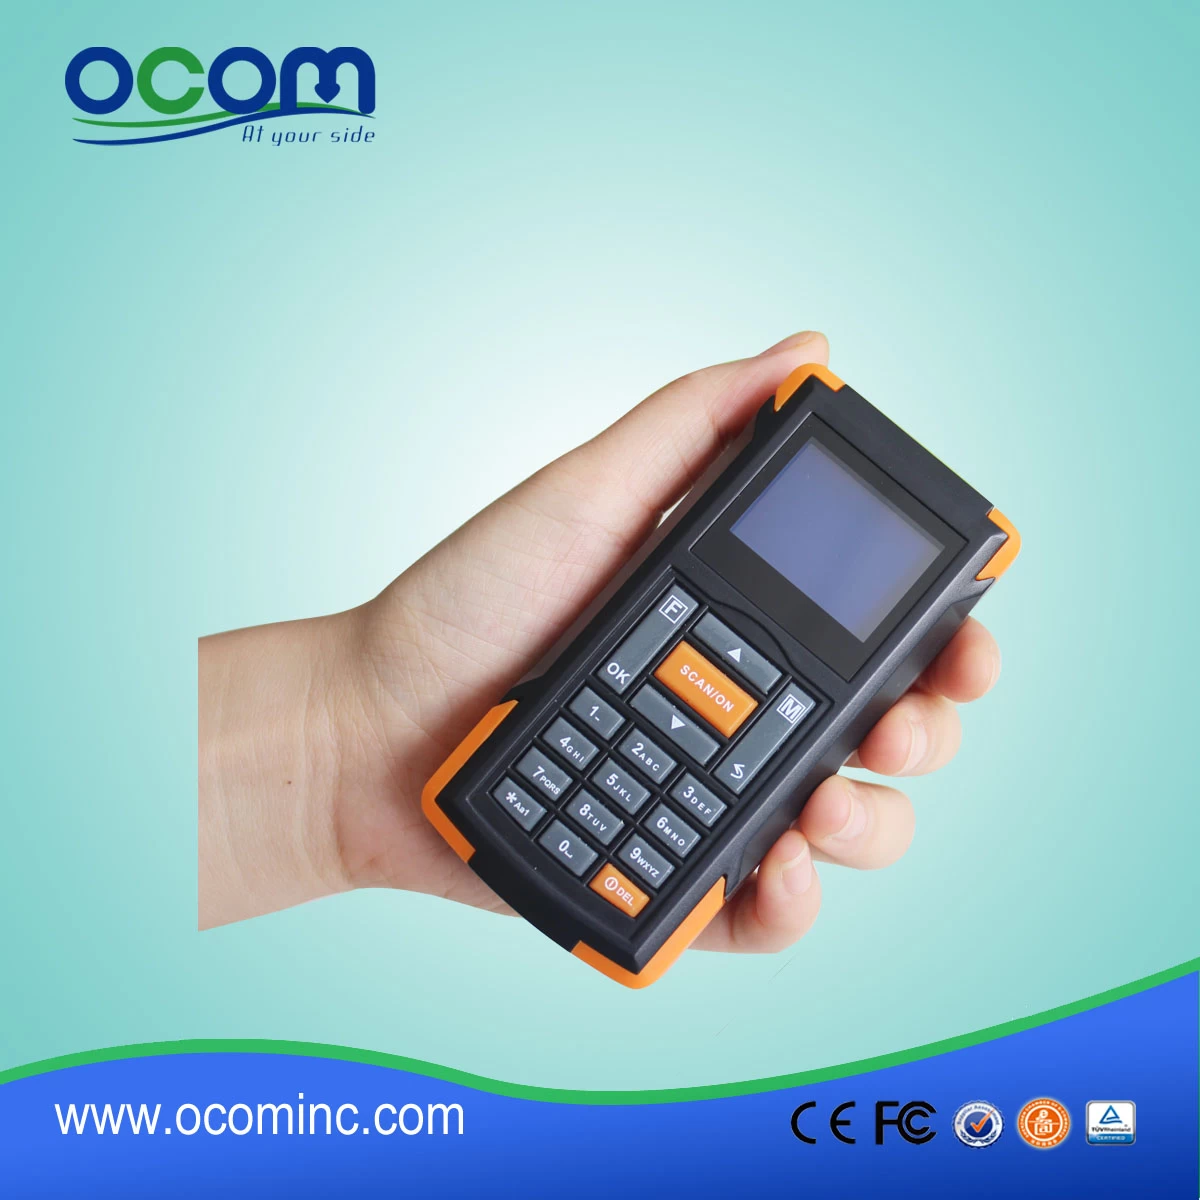 Industrial Mobile Handheld POS Terminal Barcode Scanner